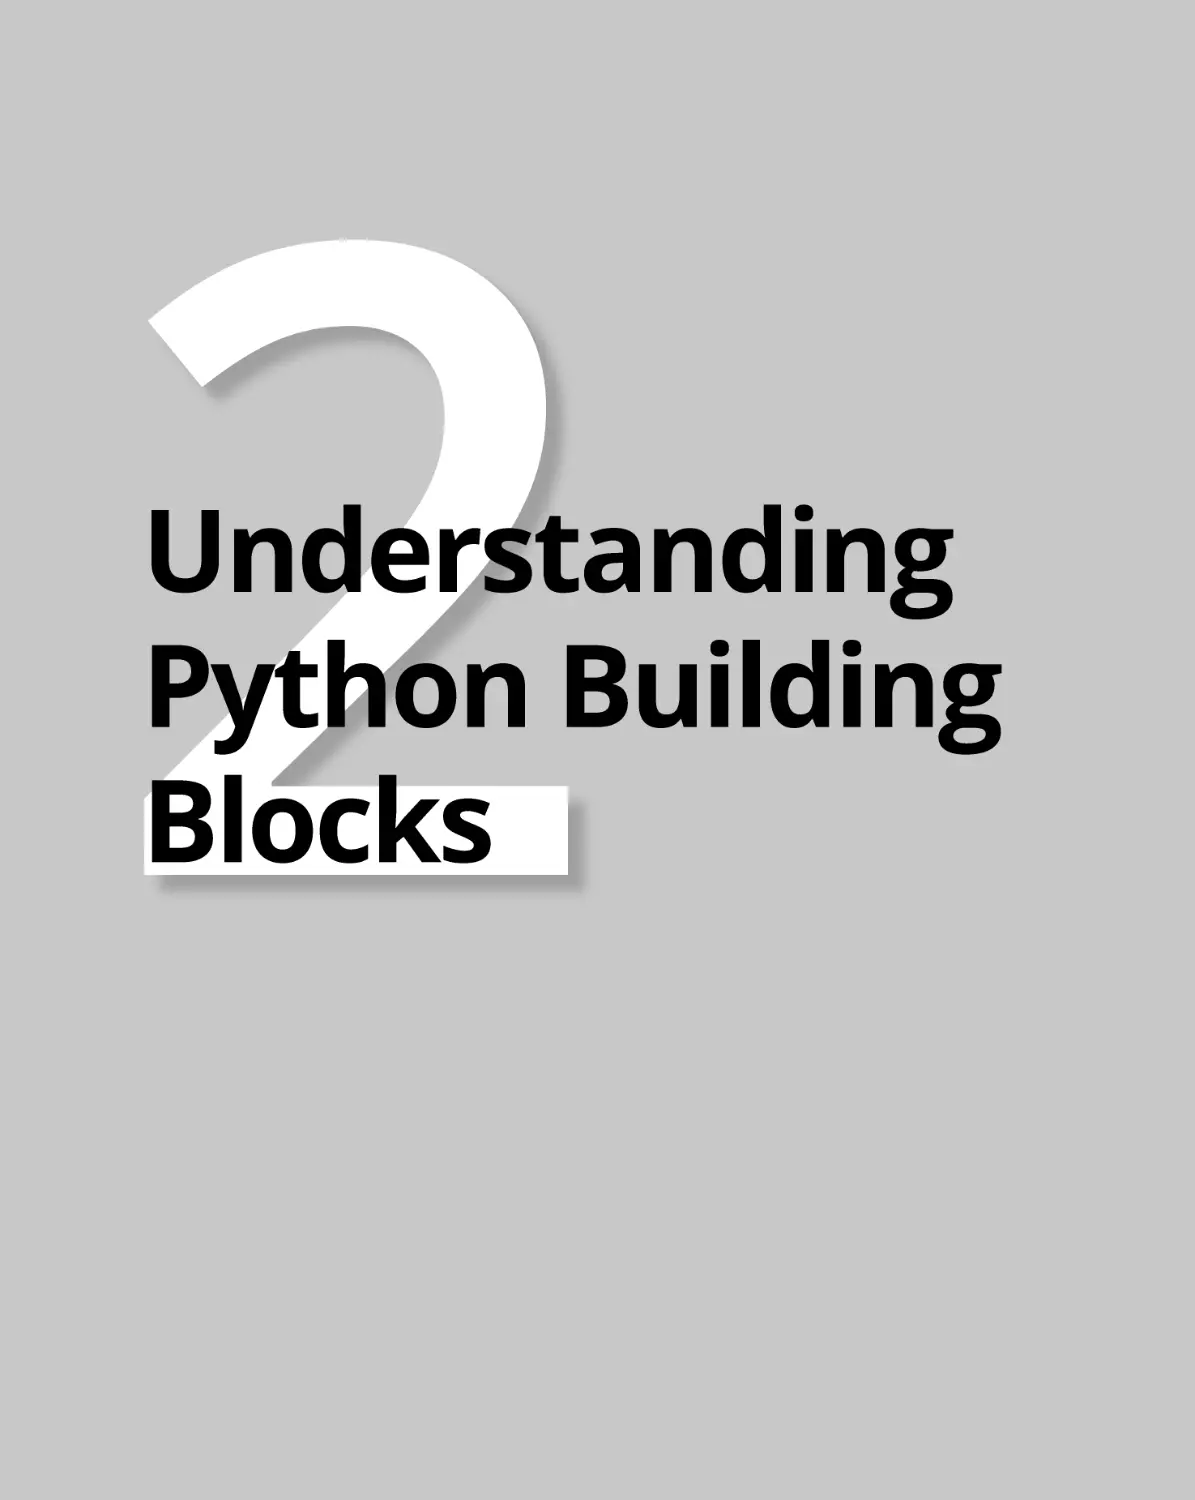 Book
2 Understanding Python Building Blocks